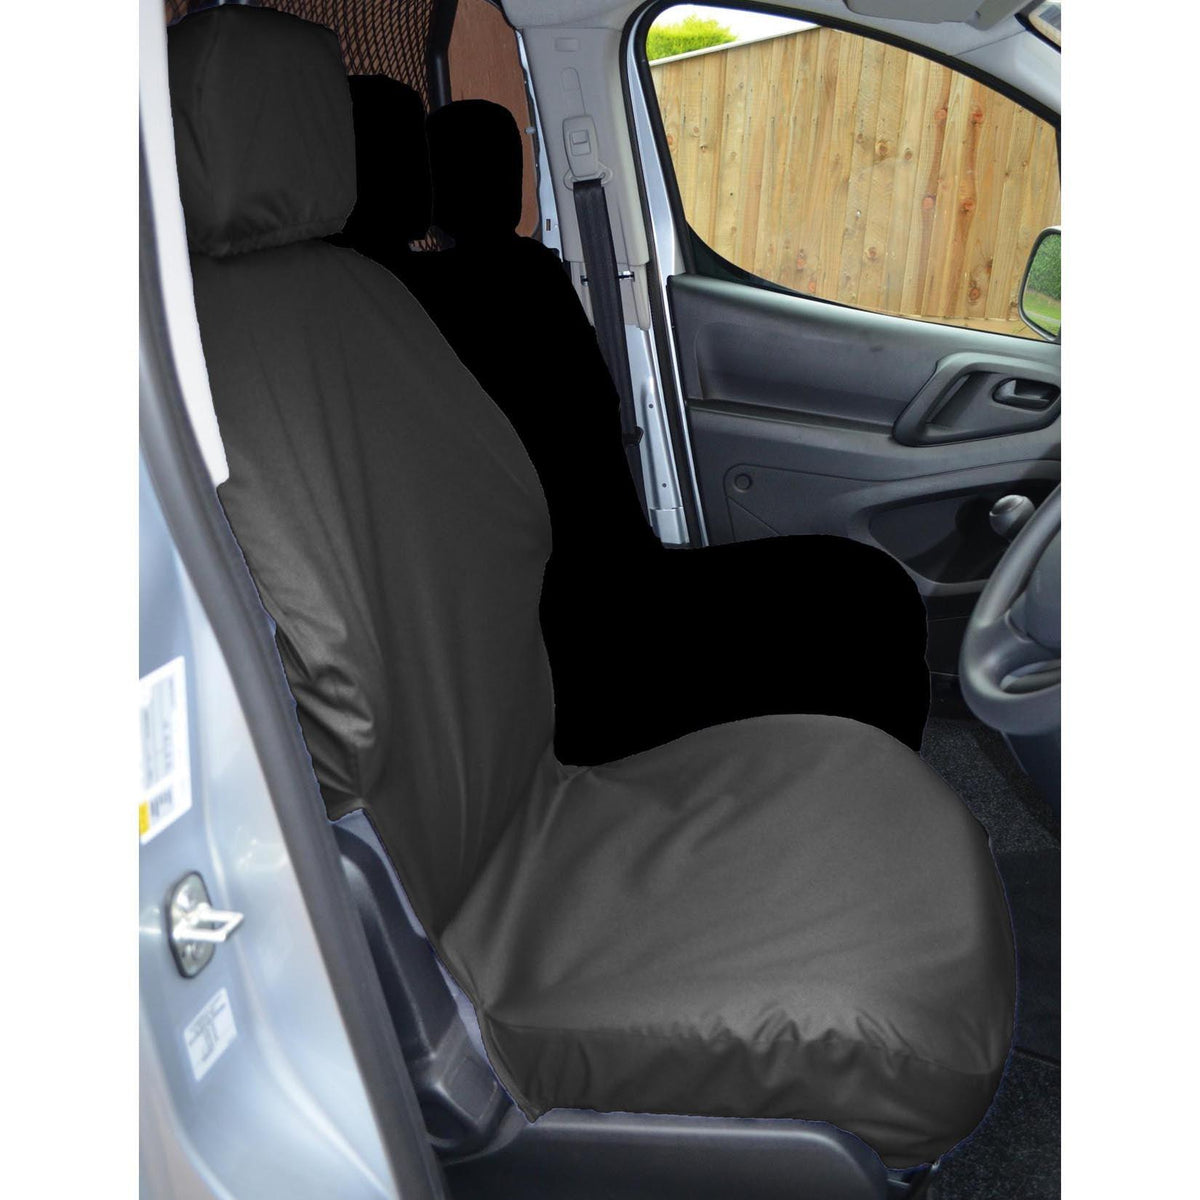 CITROEN BERLINGO 2008-2018 DRIVER'S SEAT NO ARMREST BLACK SEAT COVER - Storm Xccessories2